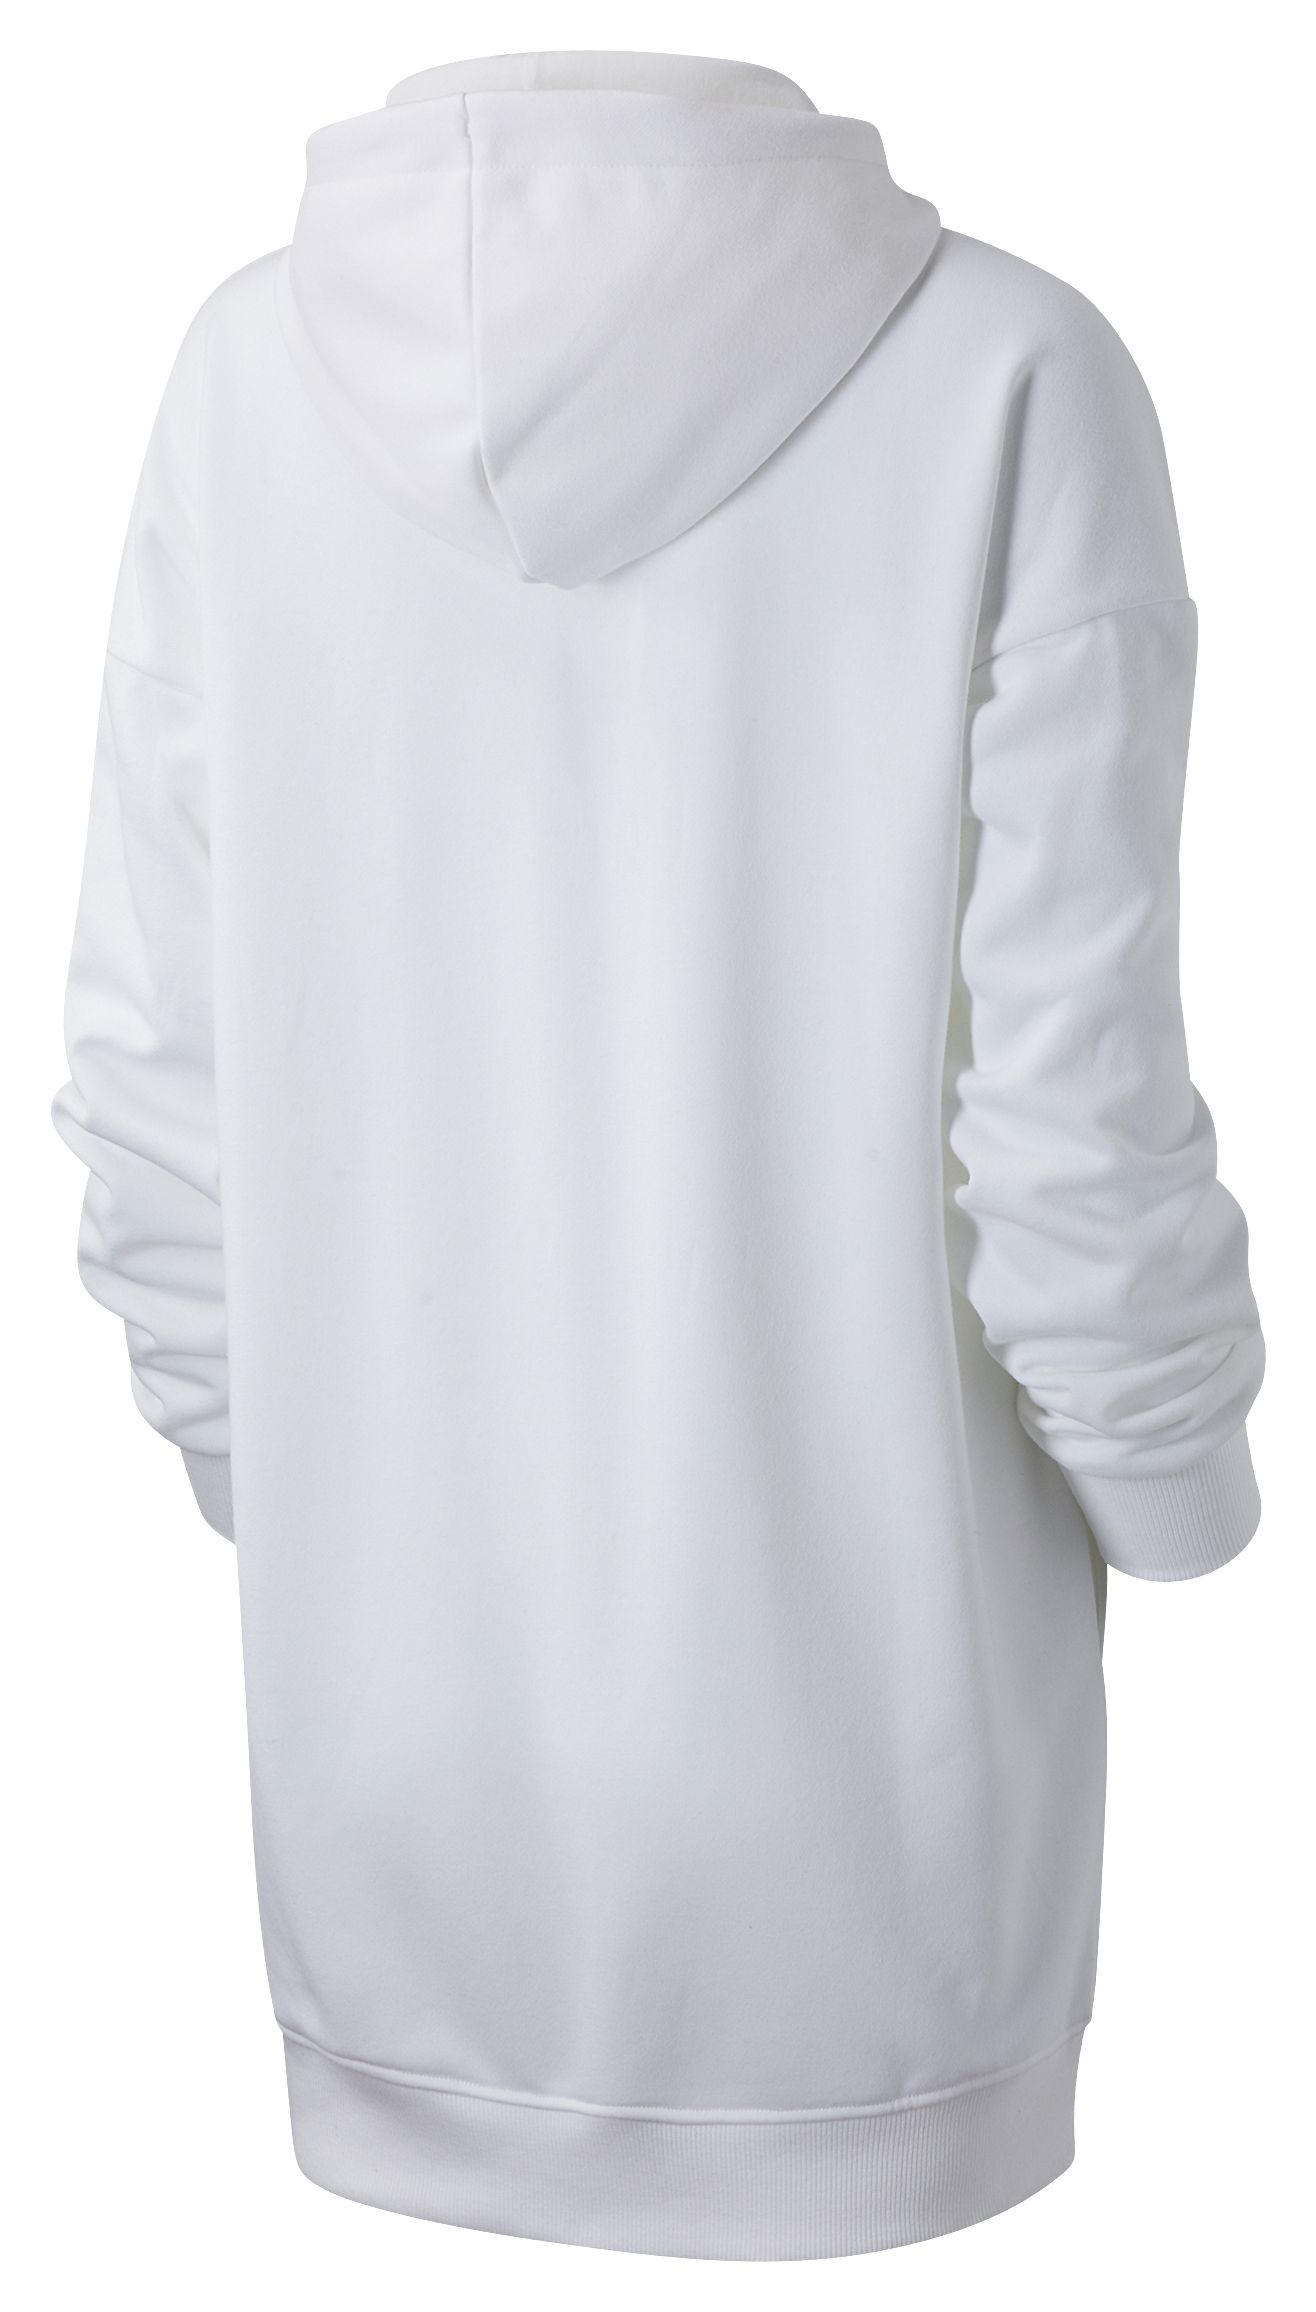 hoodie dress white